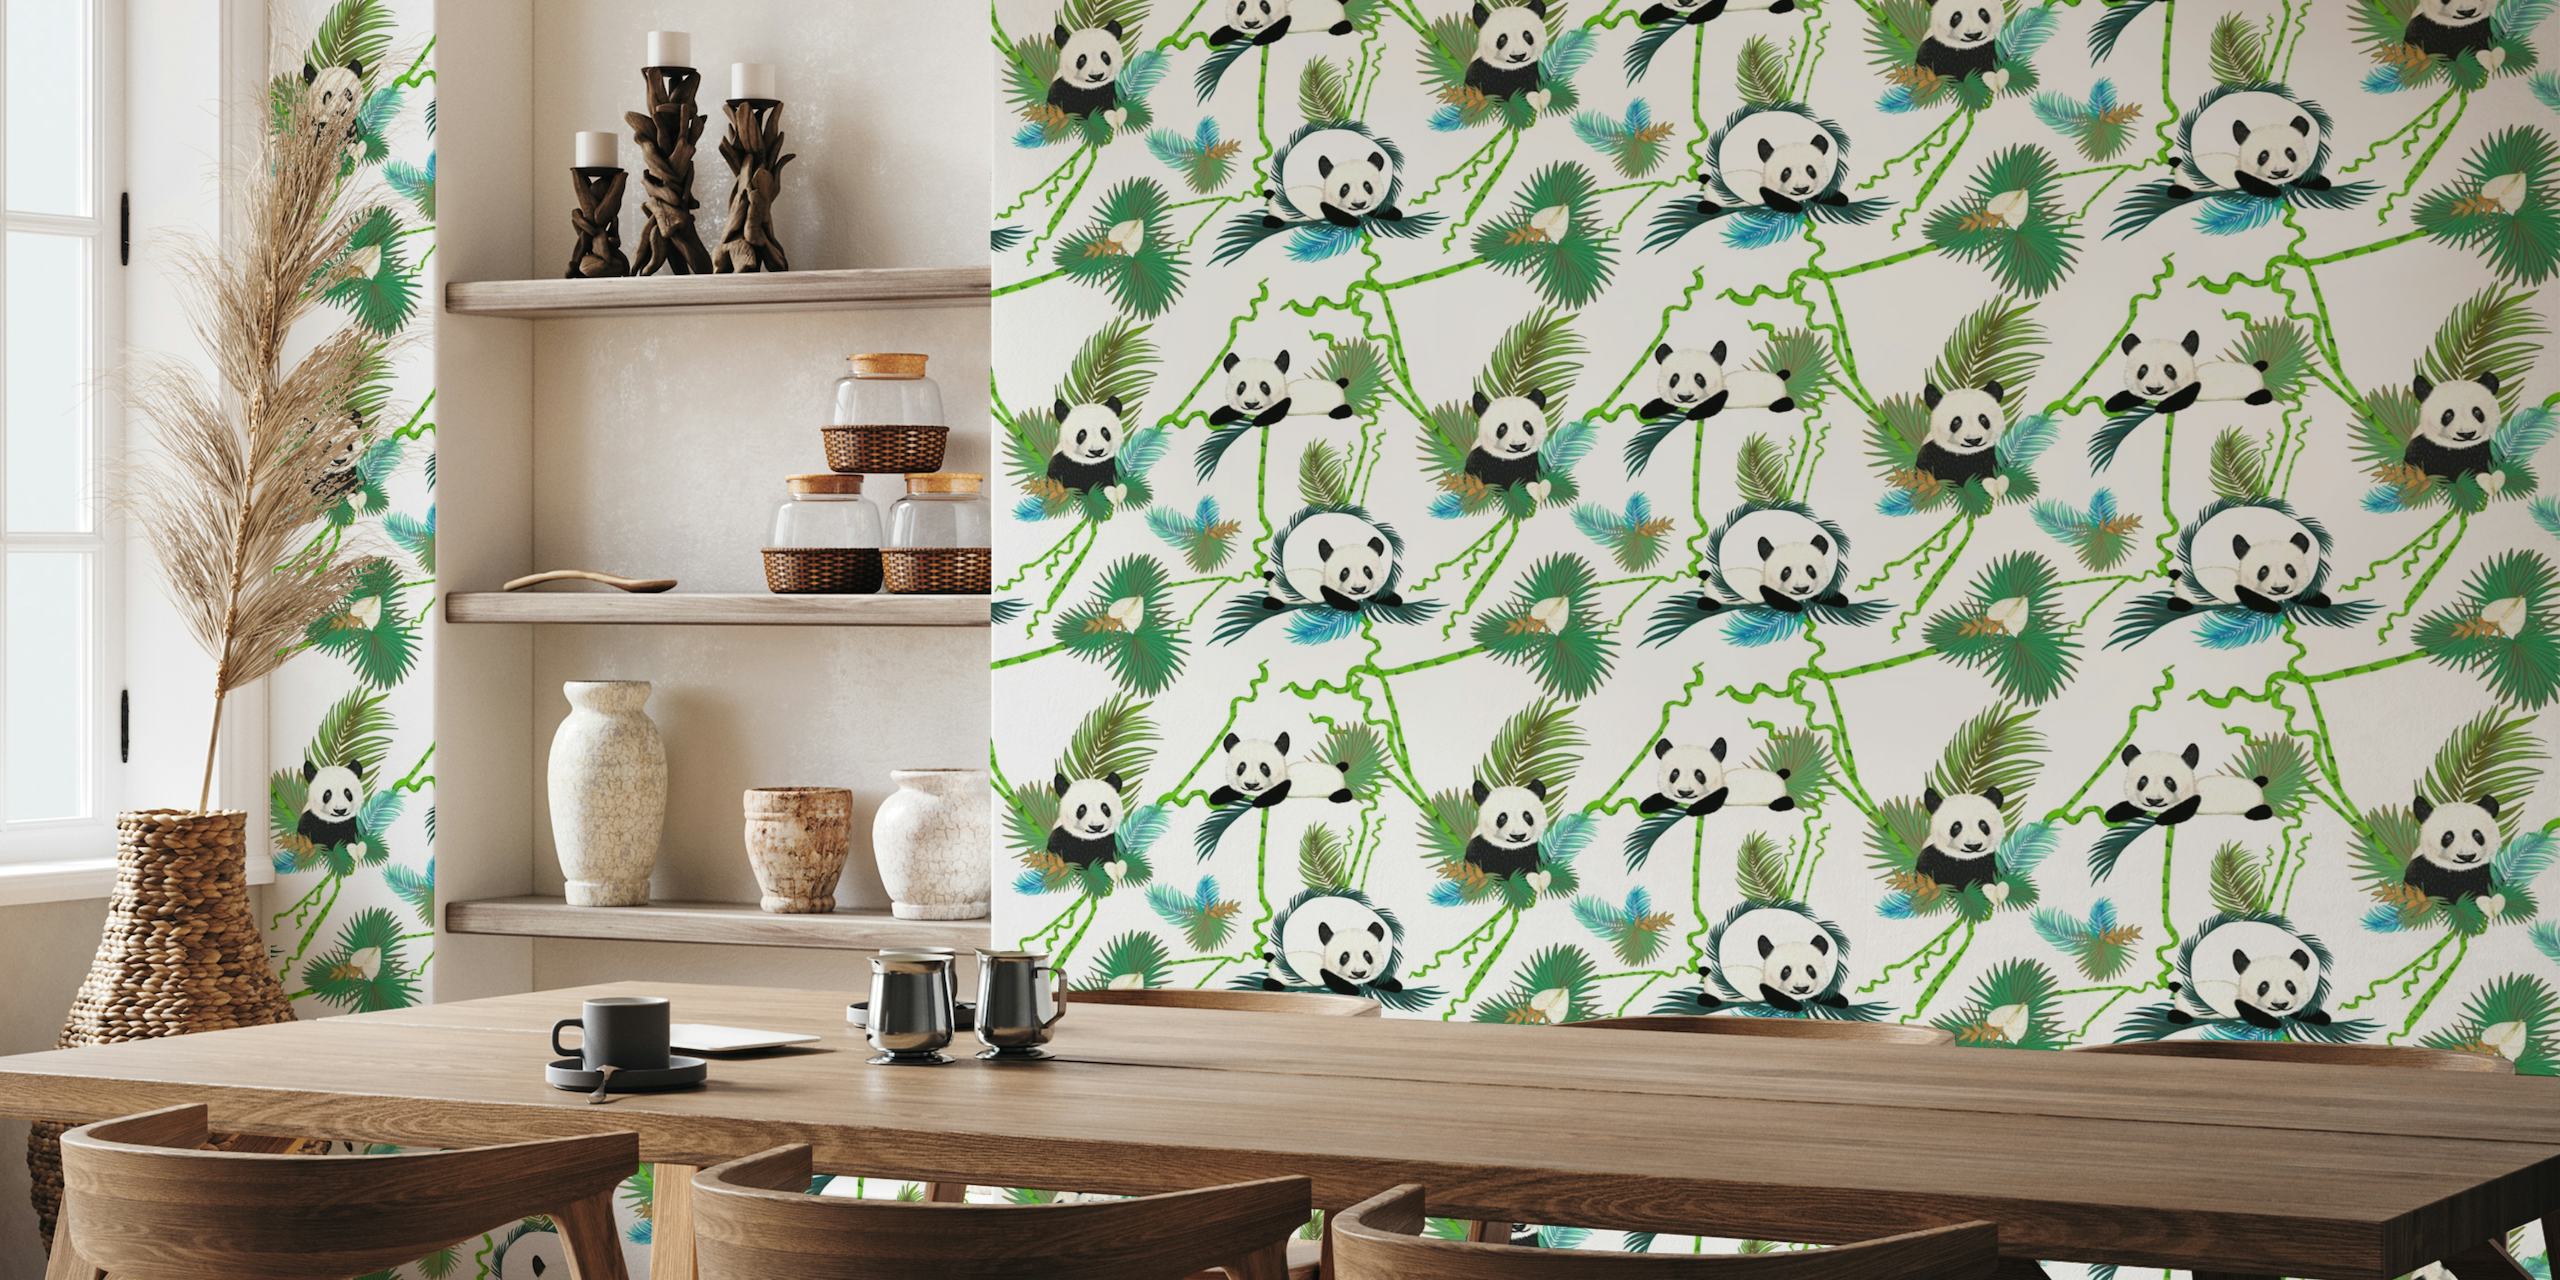 Bamboo and panda wallpaper